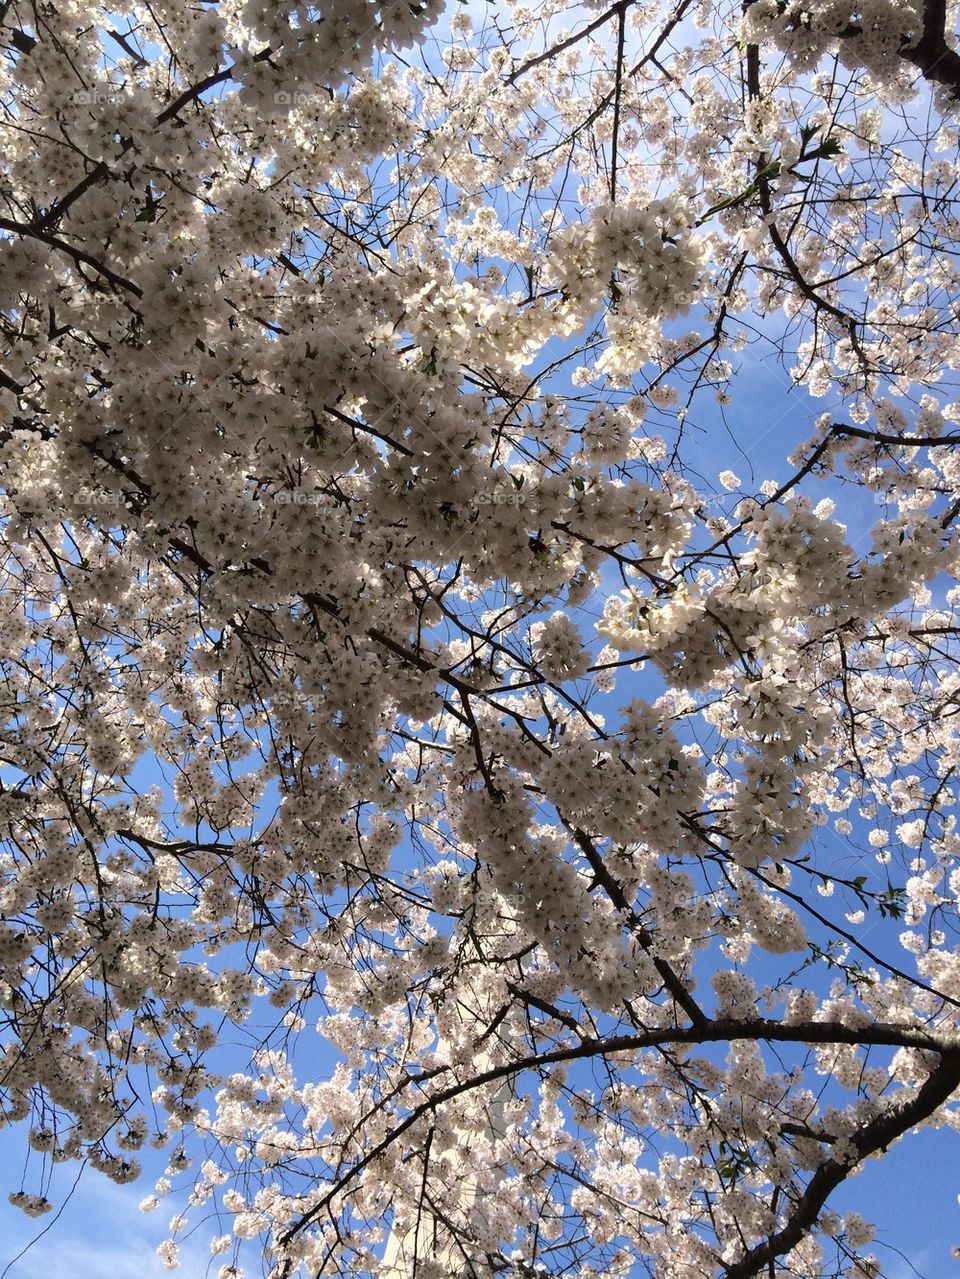 Cherry blossom in Washington D.C.